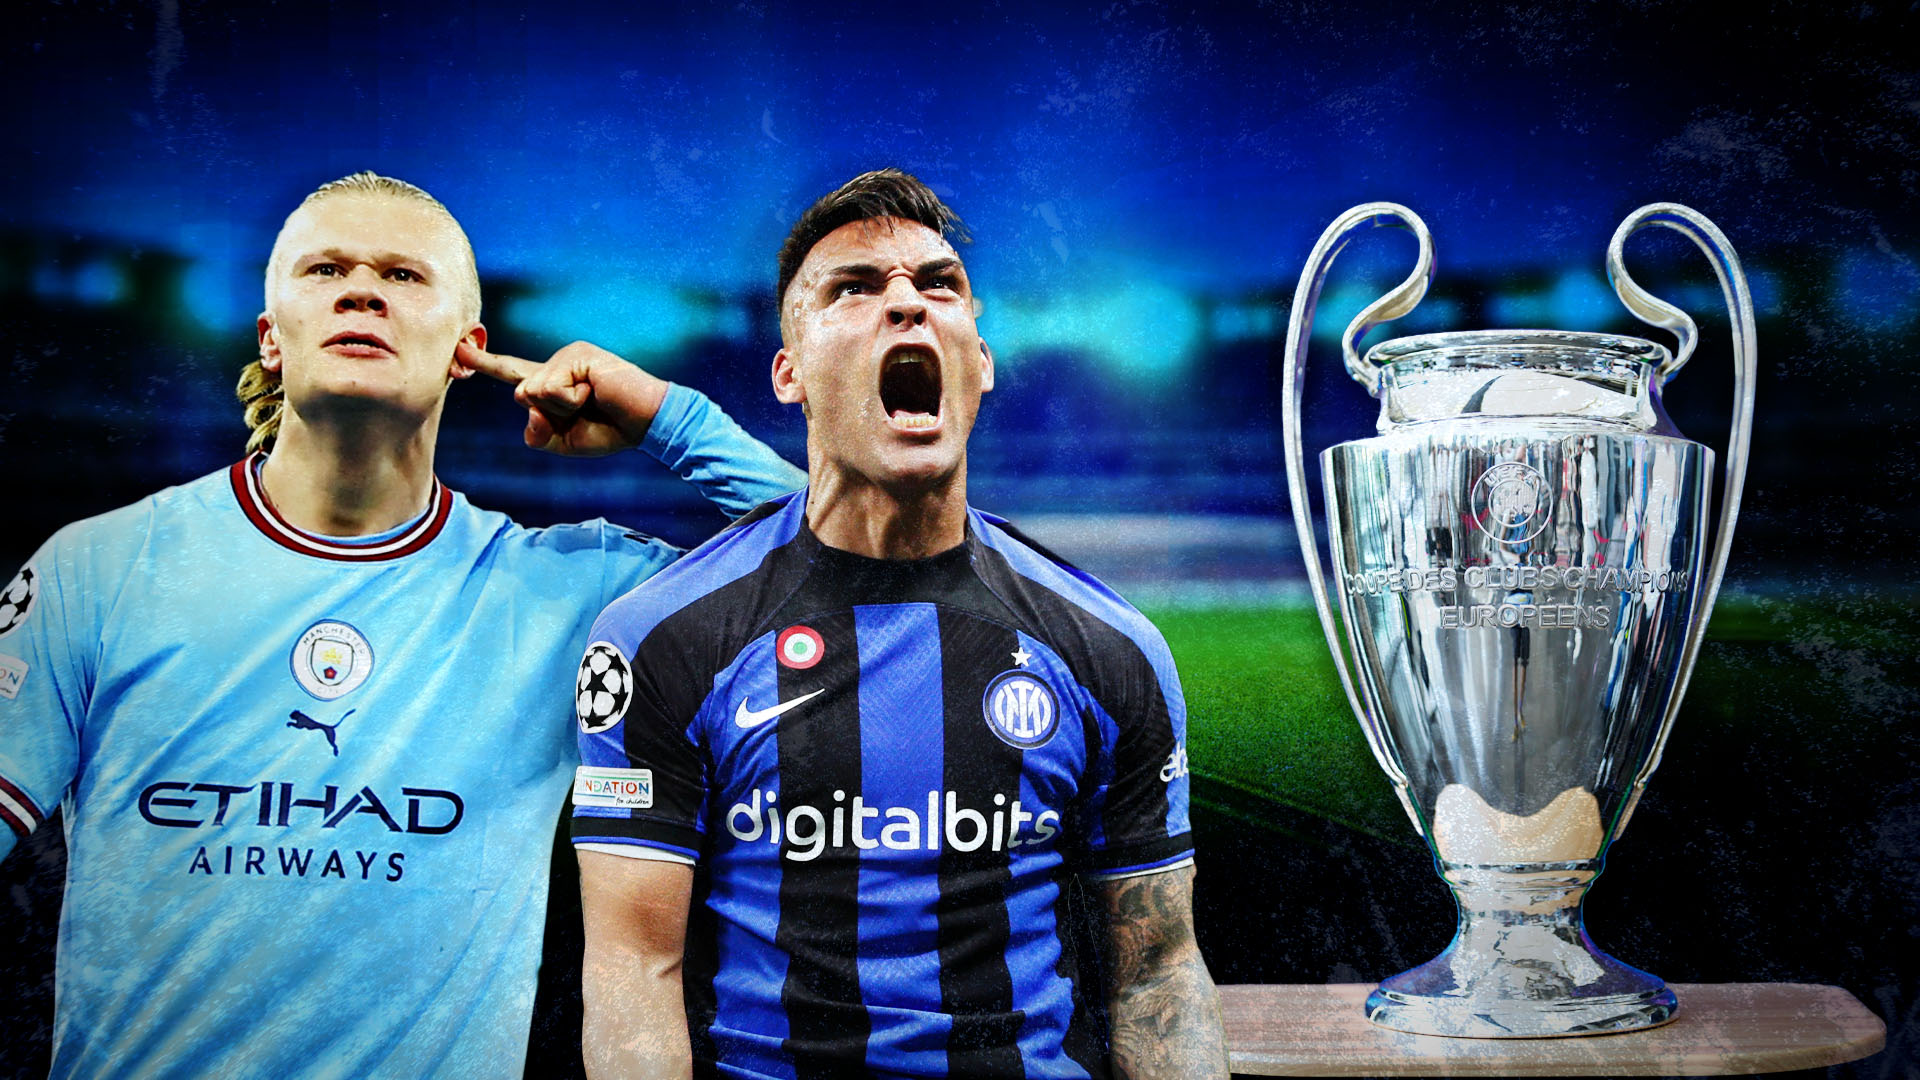 La final de la Champions League, en vivo: Manchester City e Inter confirmaron sus equipos titulares